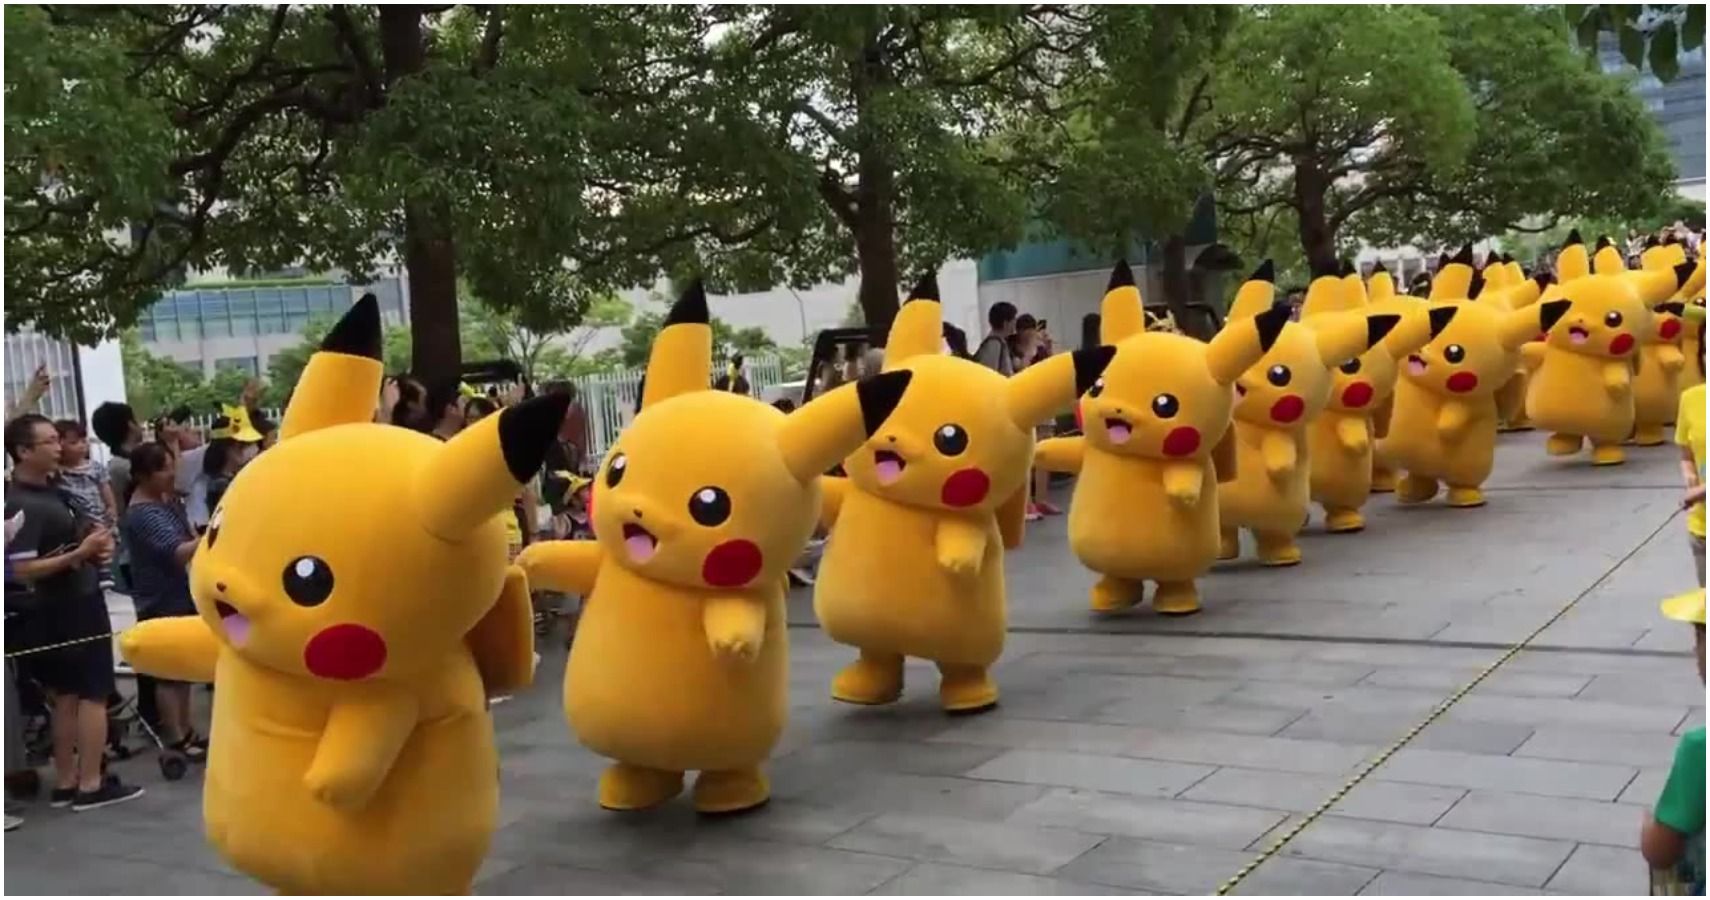 Pokémon Theme Park Coming To Universal Studios In 2020